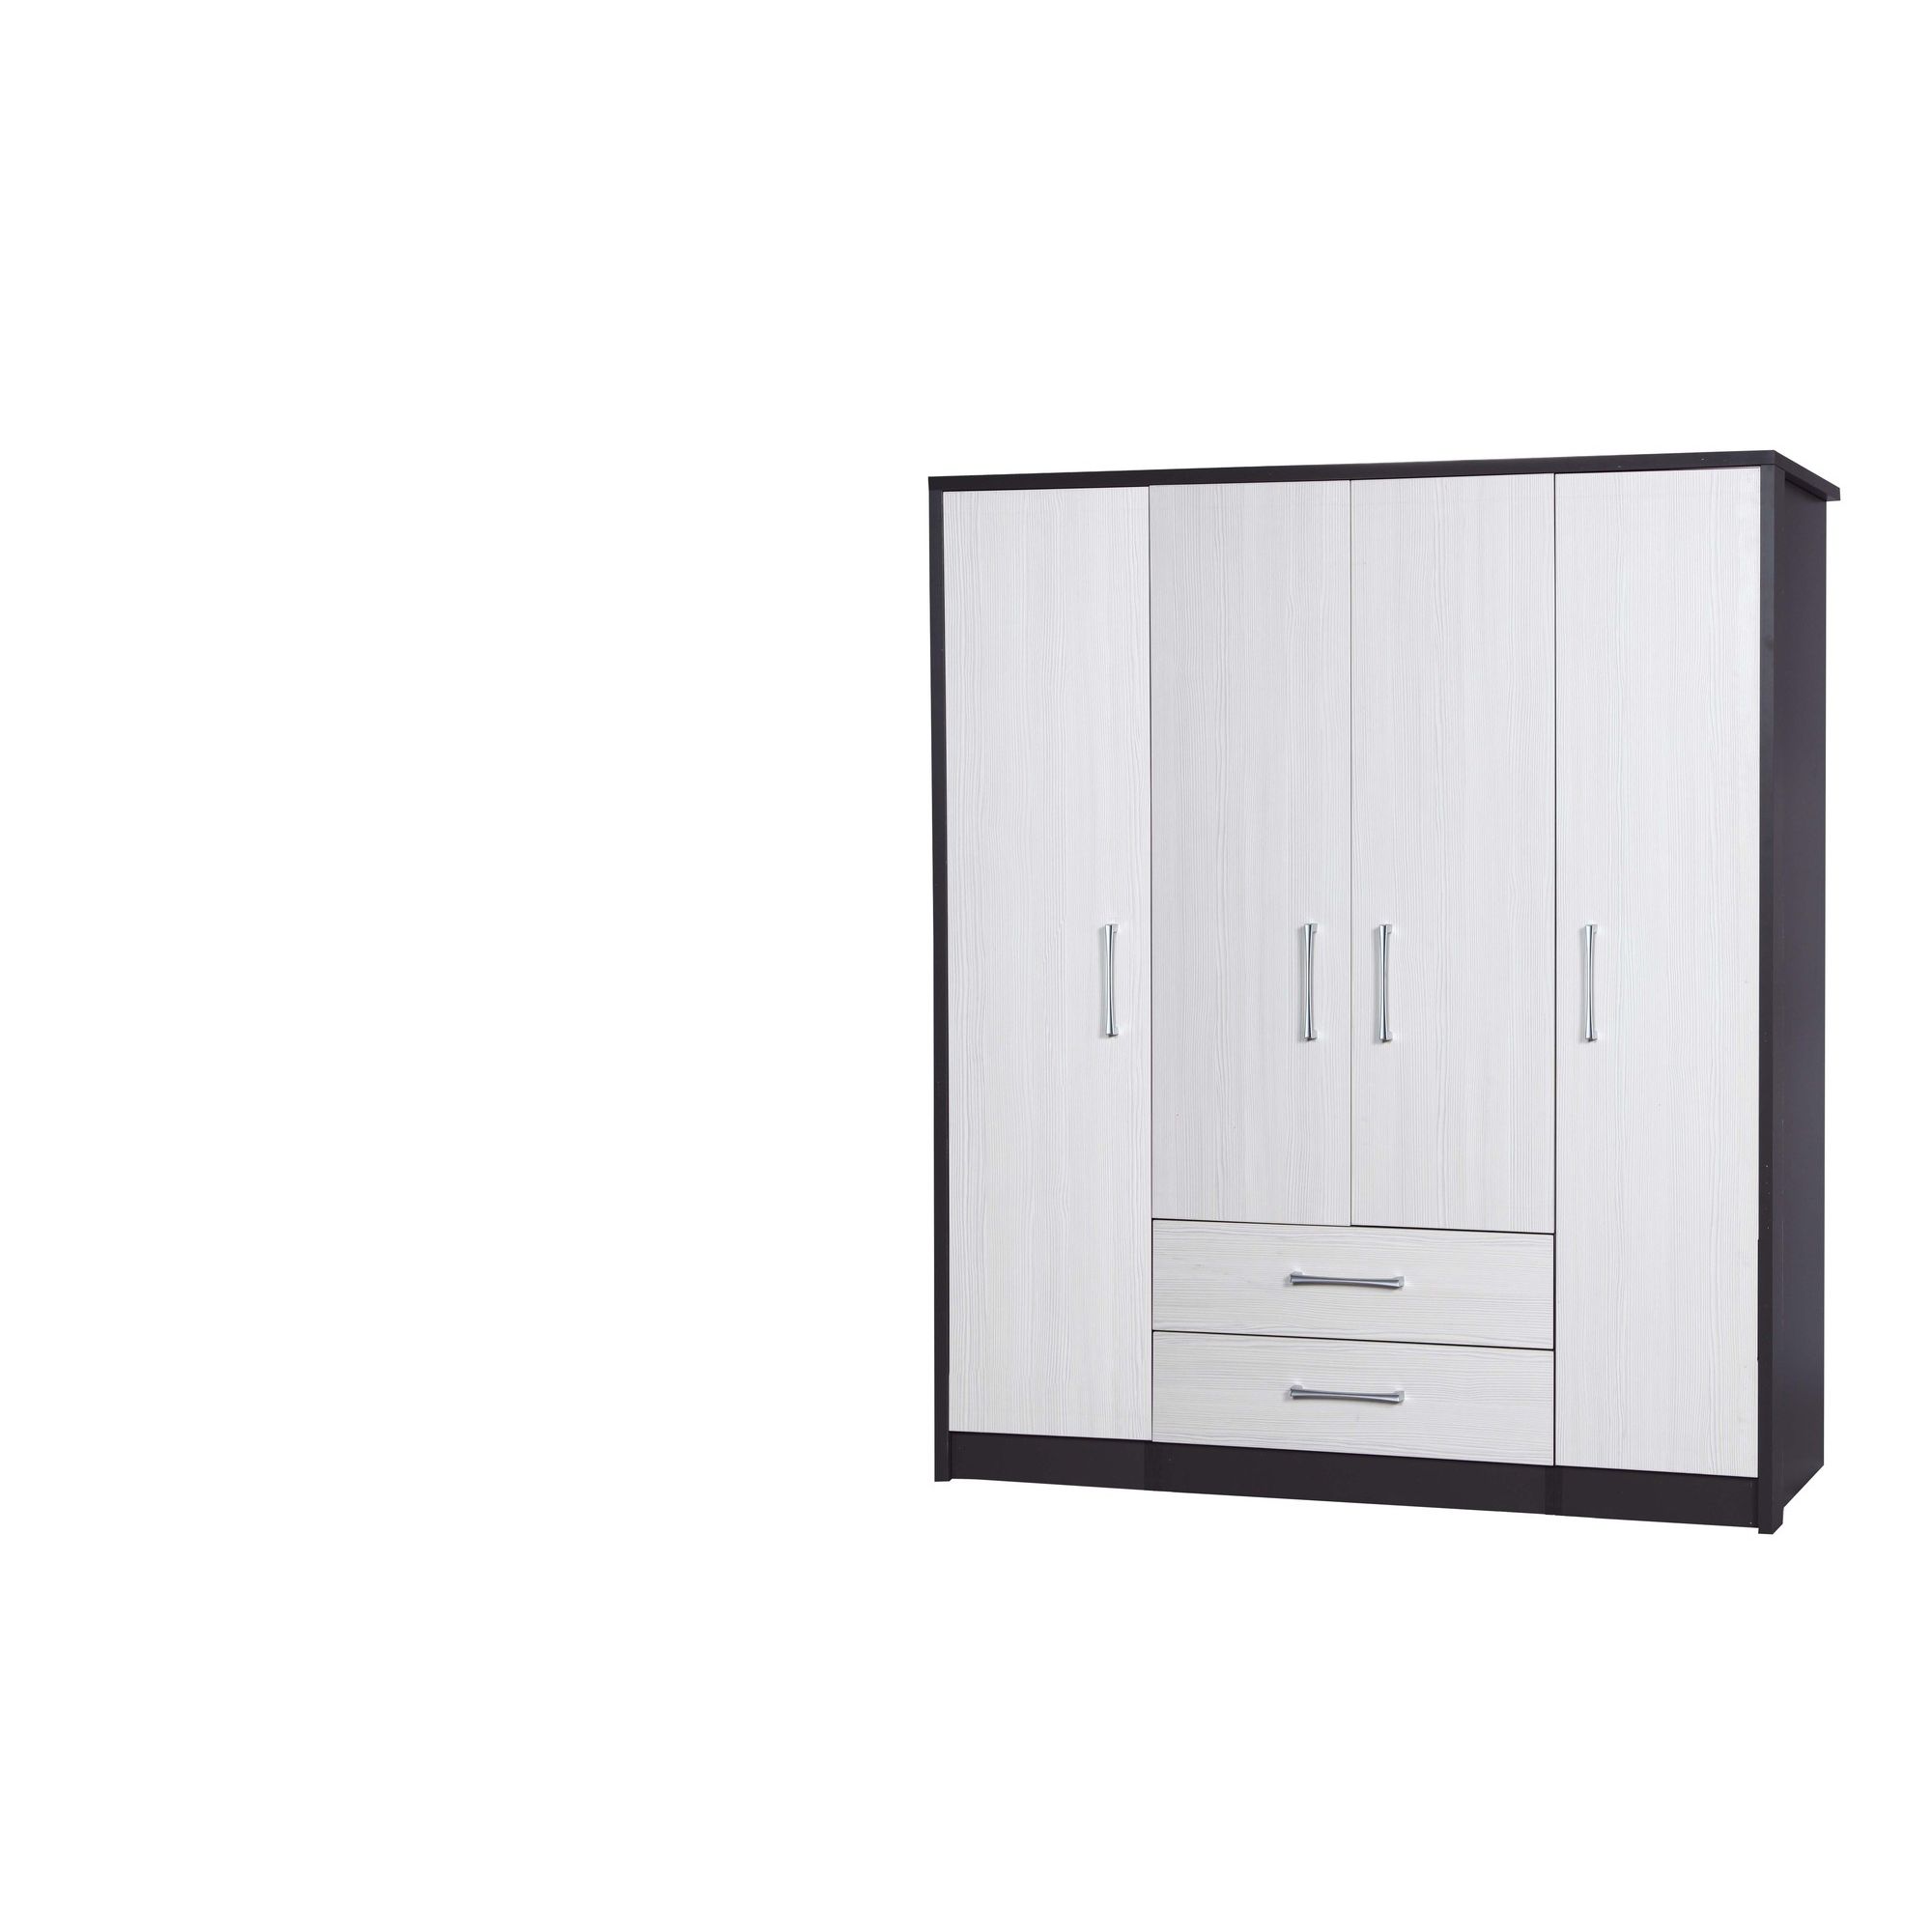 Alto Furniture Avola 4 Door Combi and Singles Wardrobe - Grey Carcass With White Avola at Tescos Direct